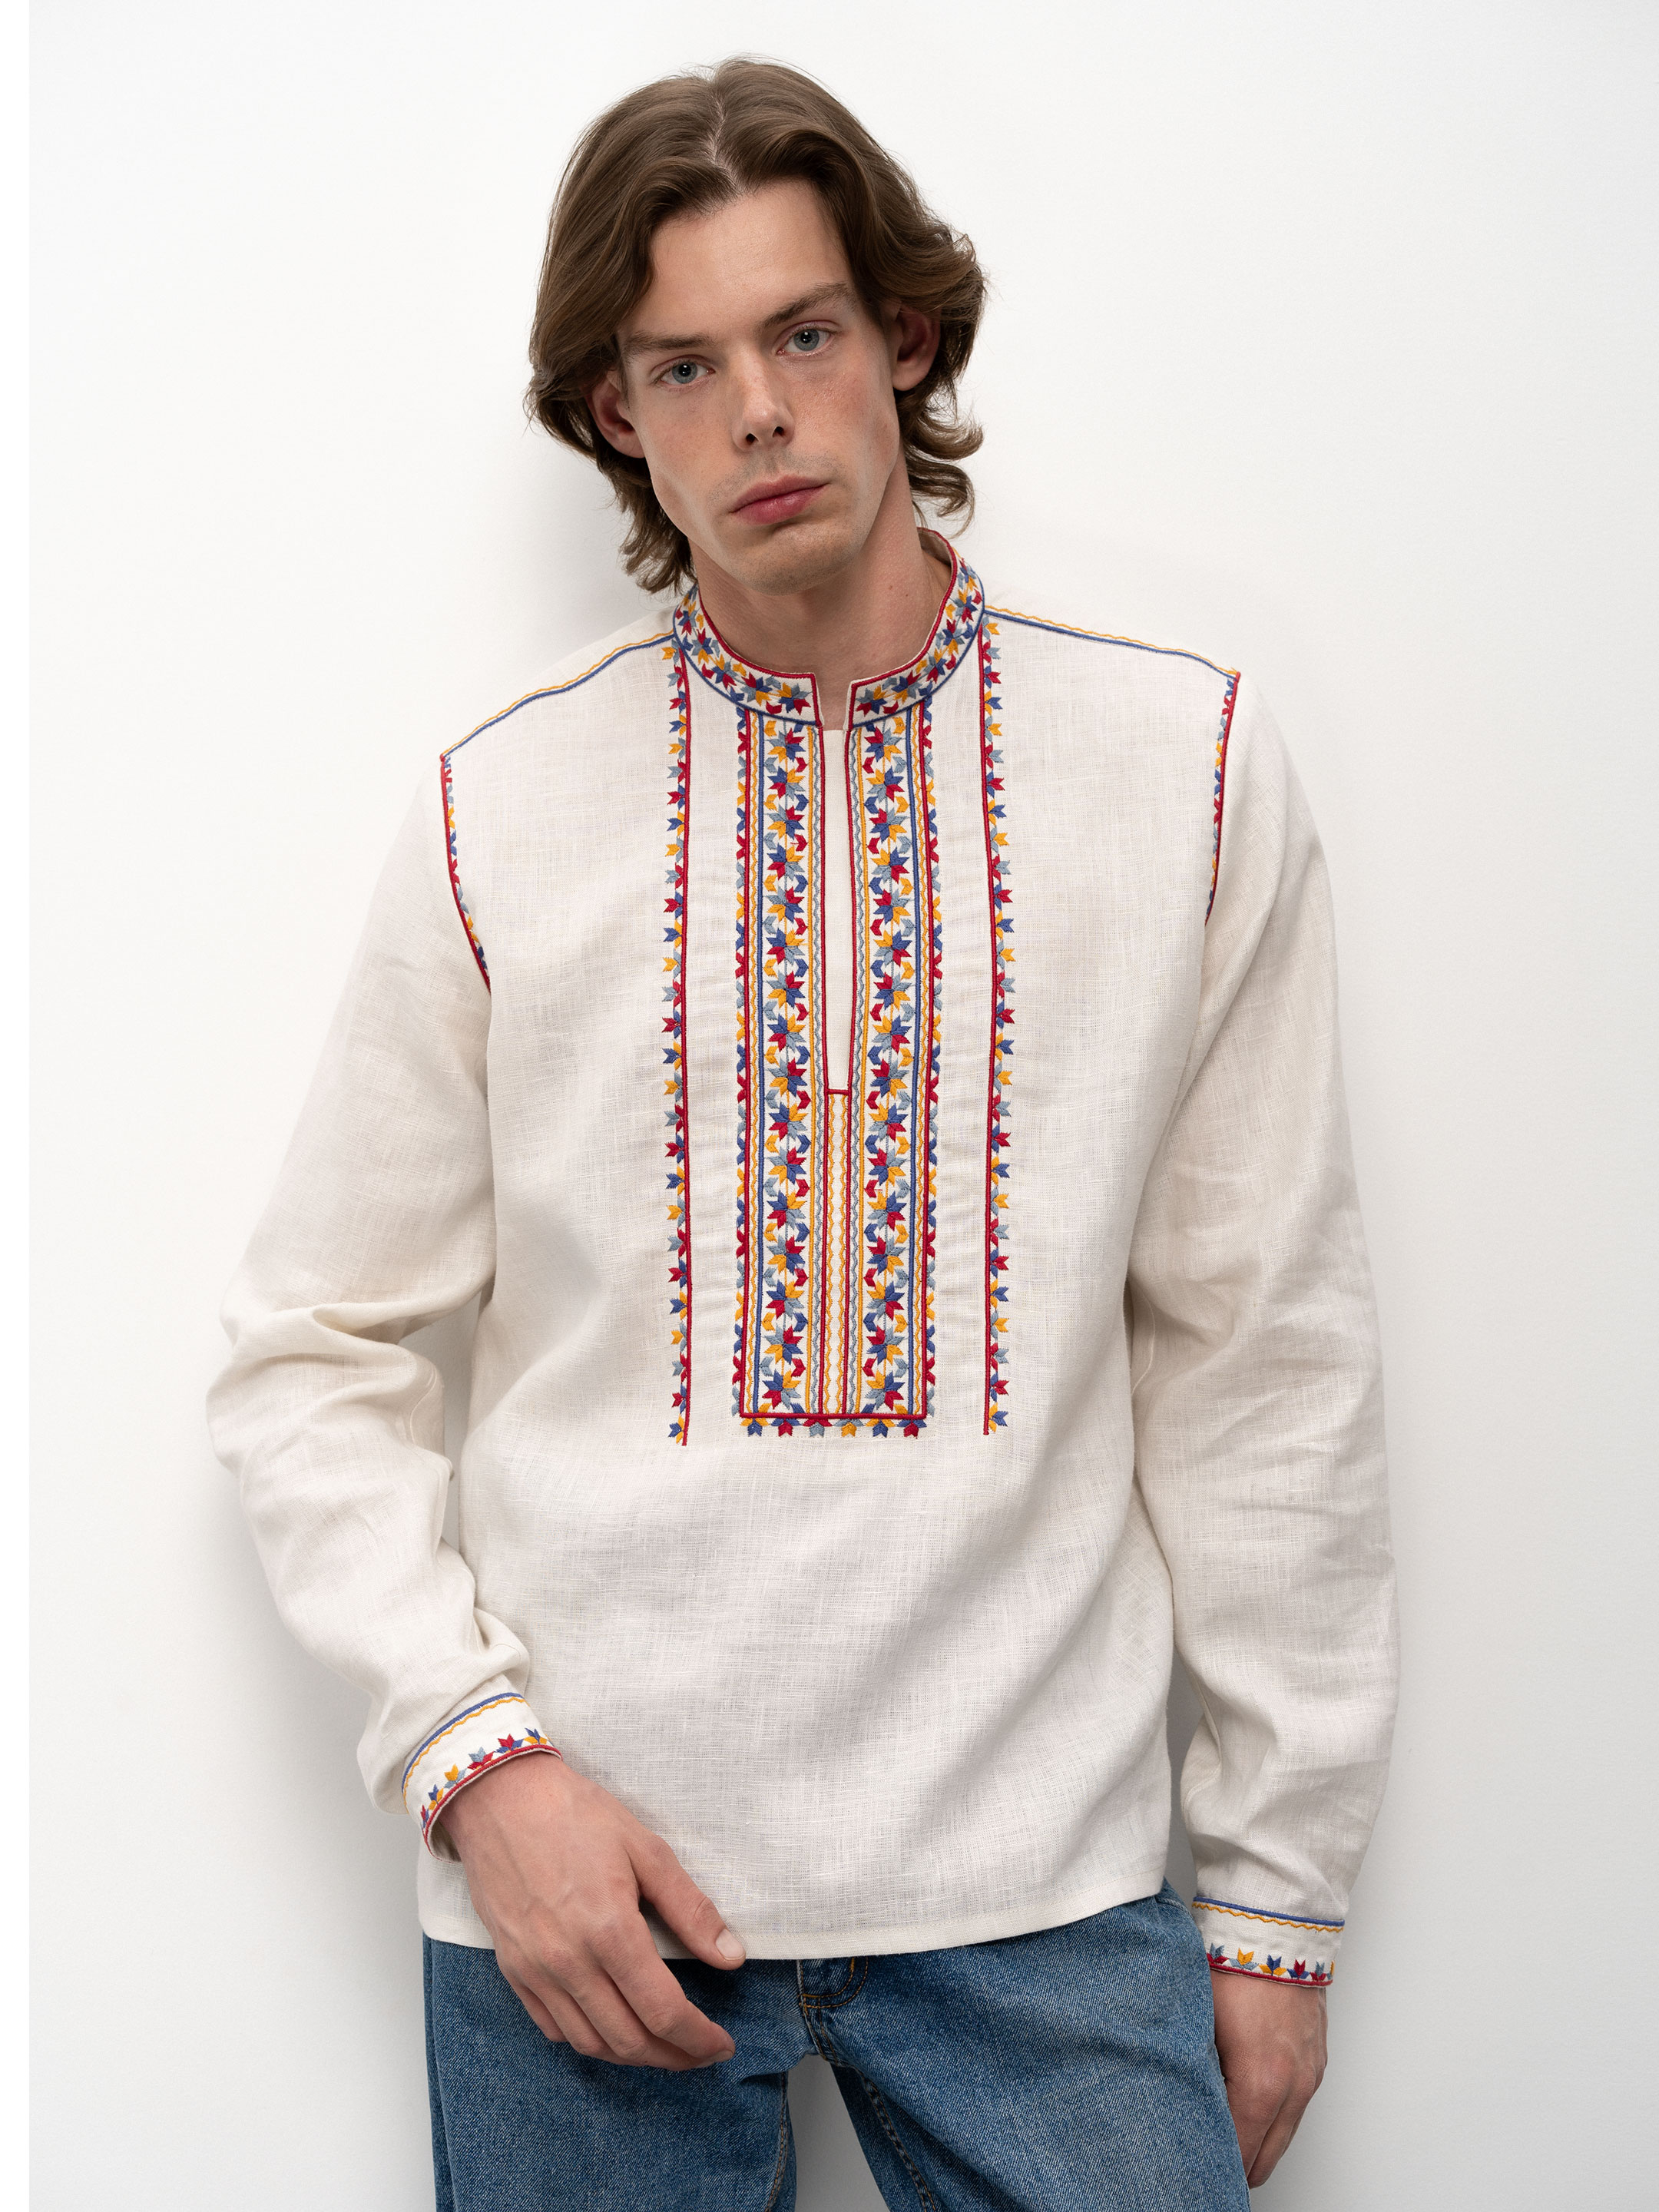 Men's shirt with embroidery Yavorivska - photo 1